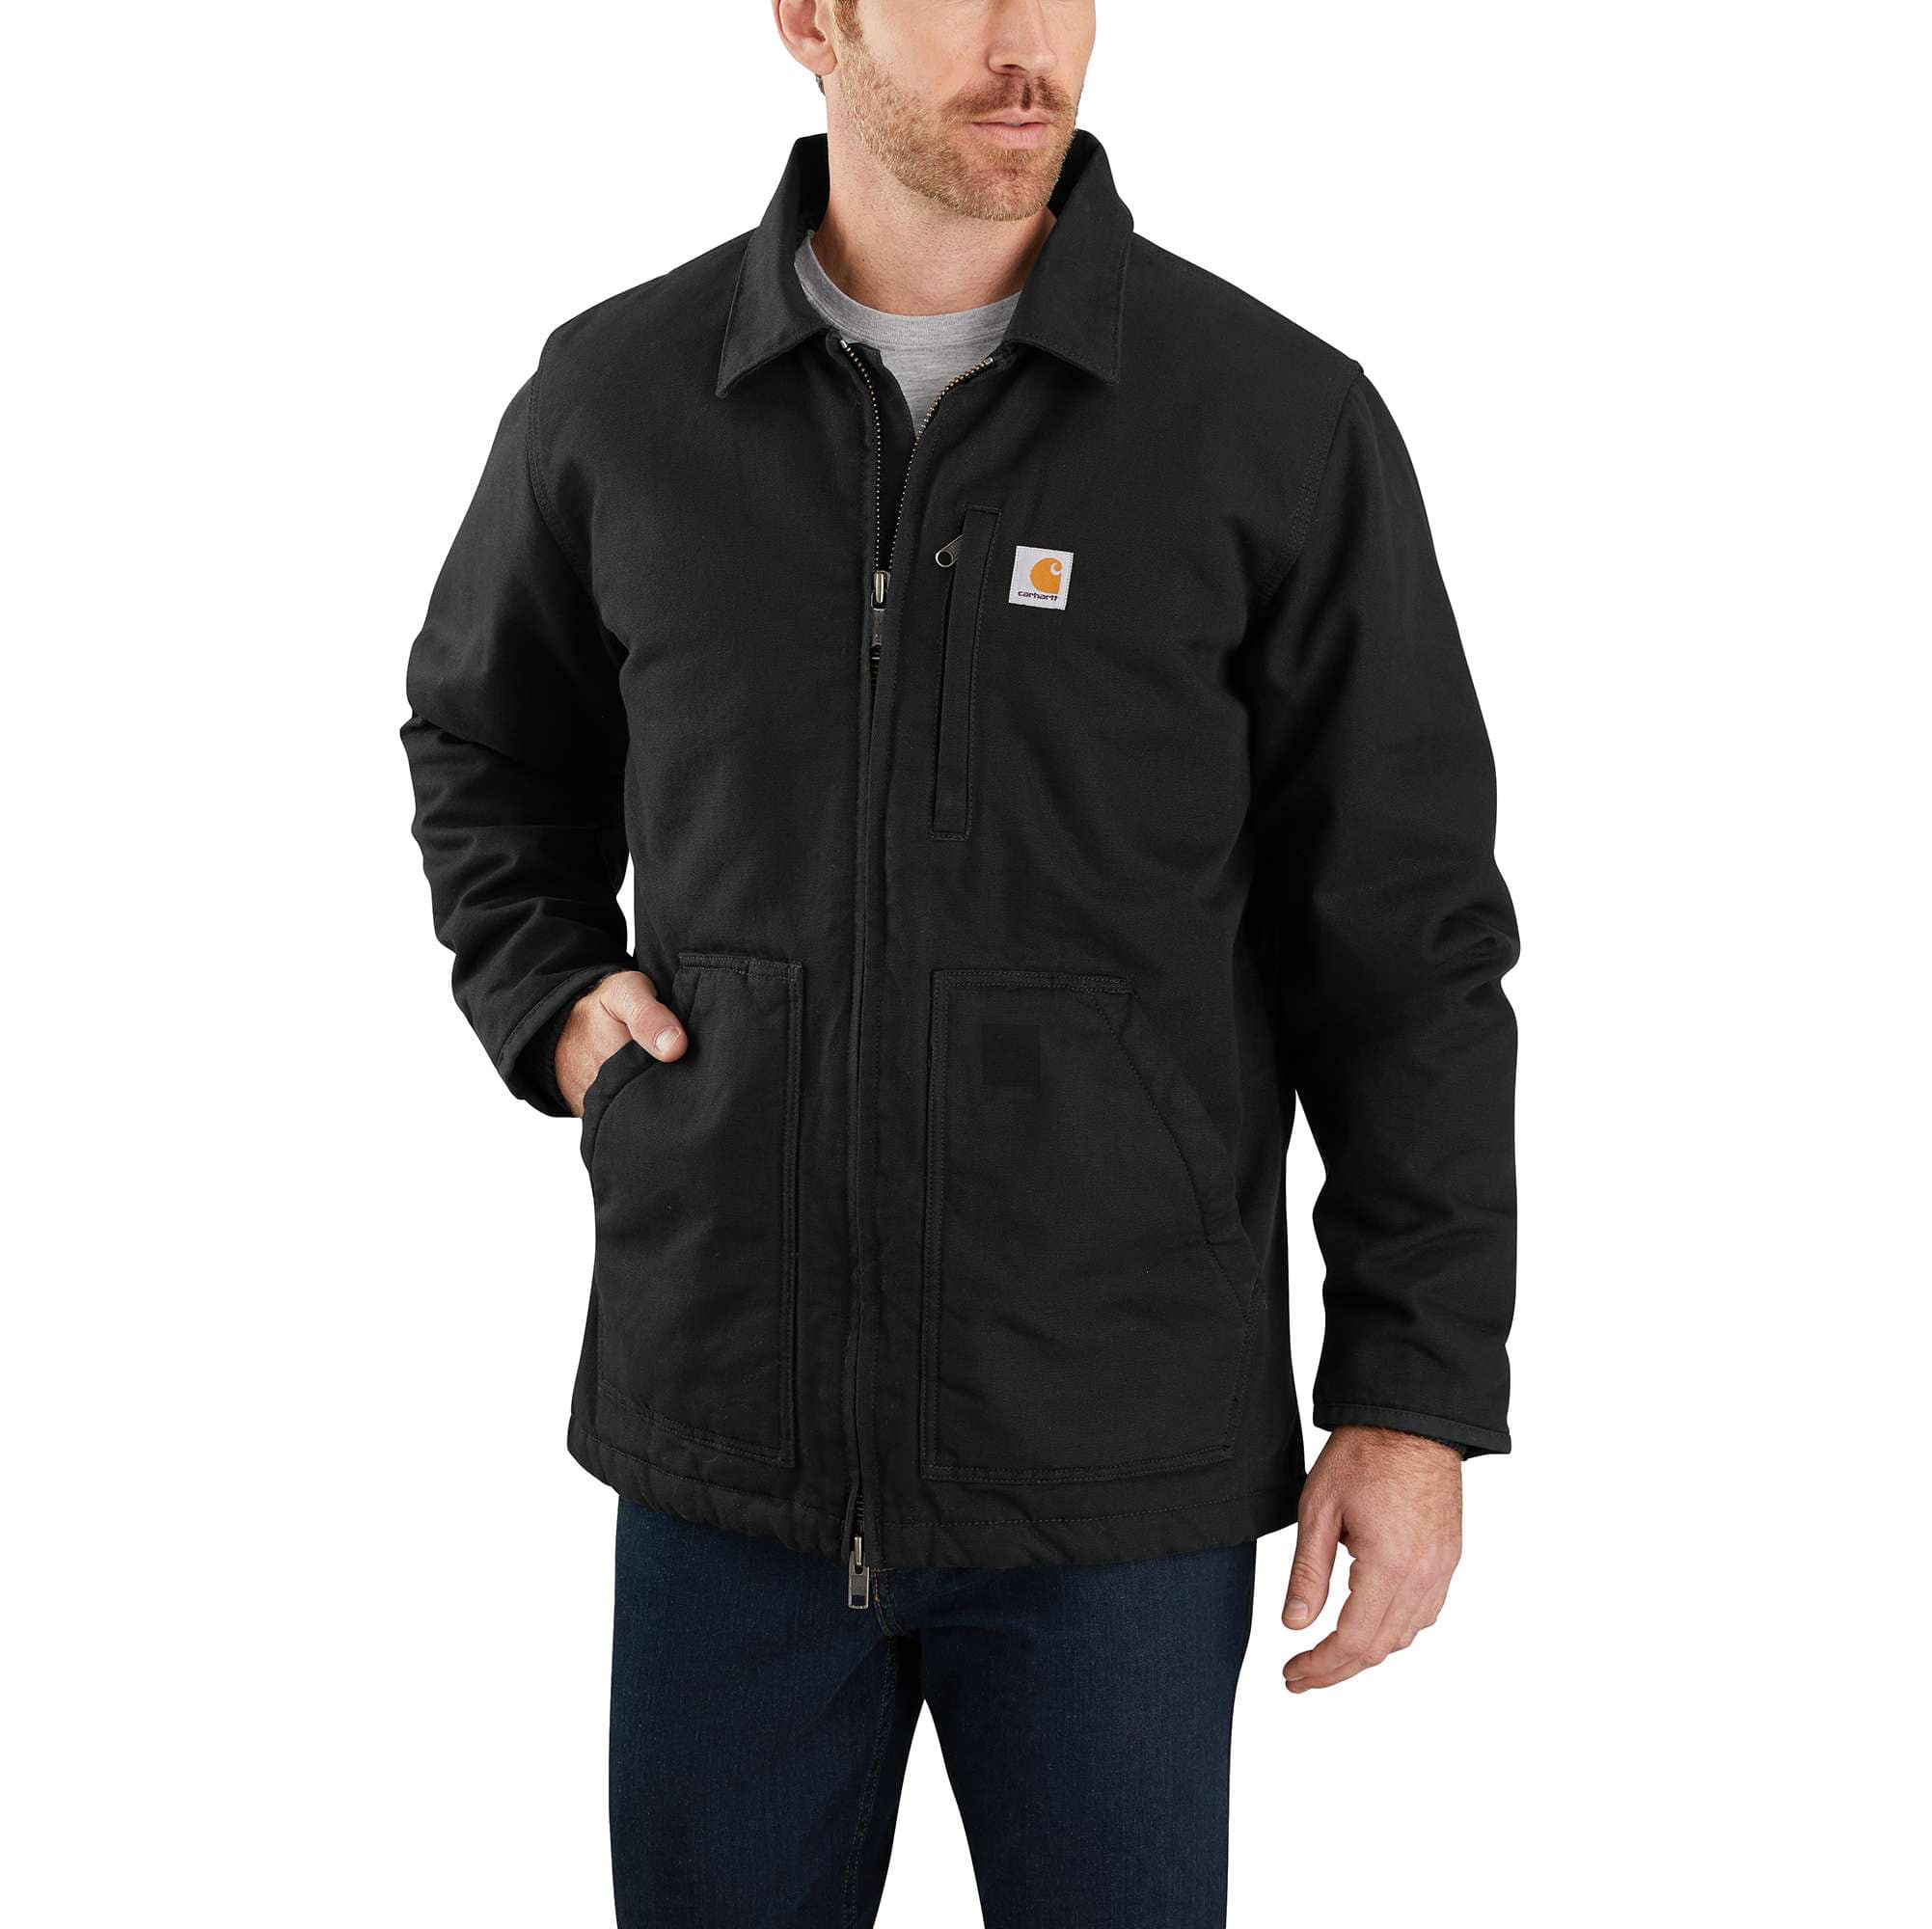 Men’s Work Coats and Jackets | Carhartt